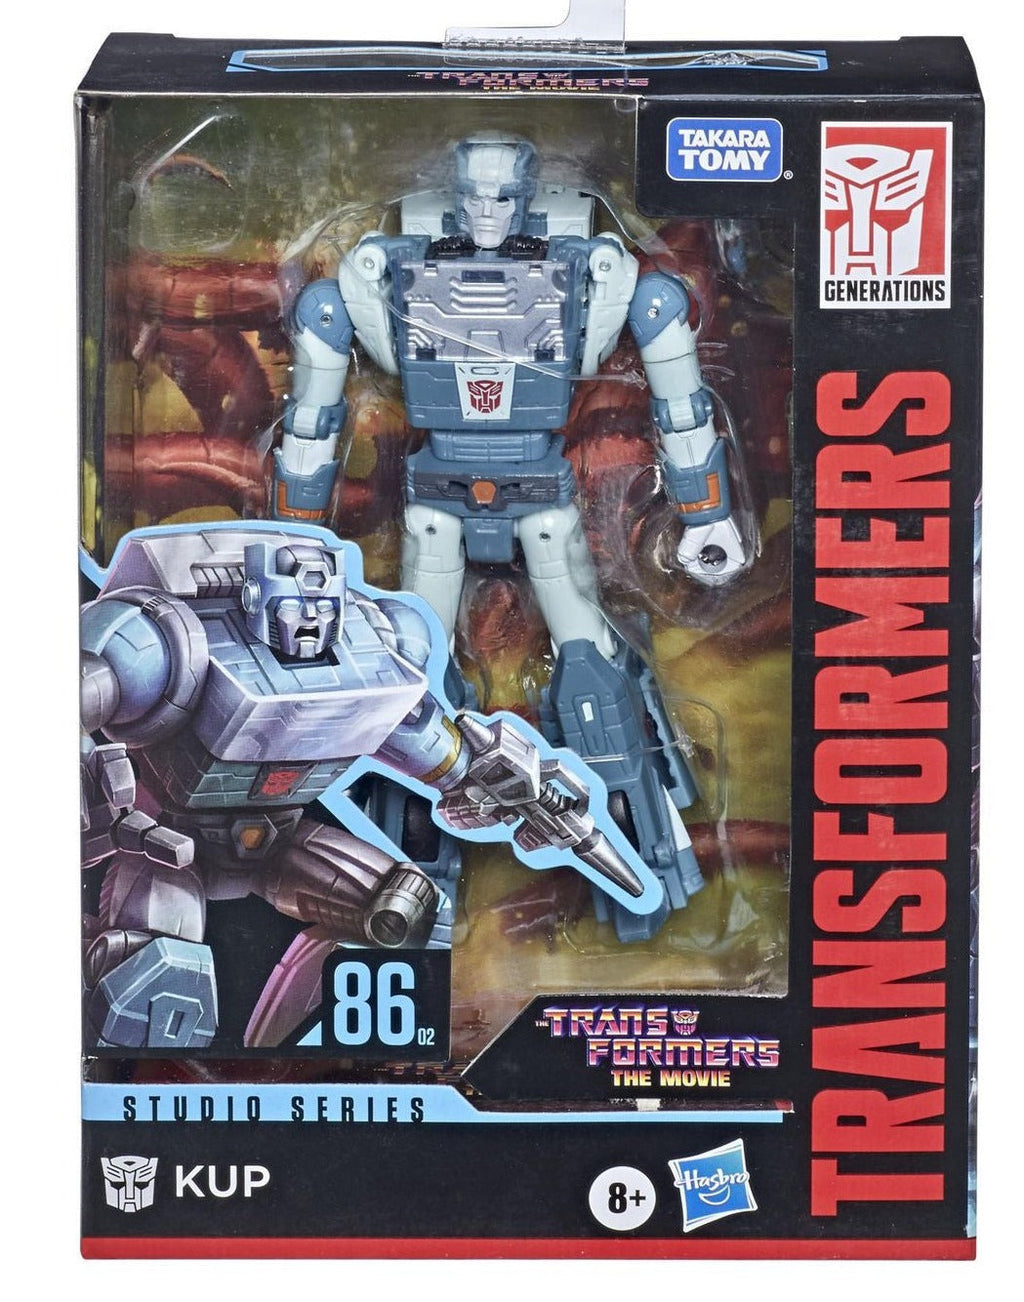 Transformers Studio Series 86-02 - Kup